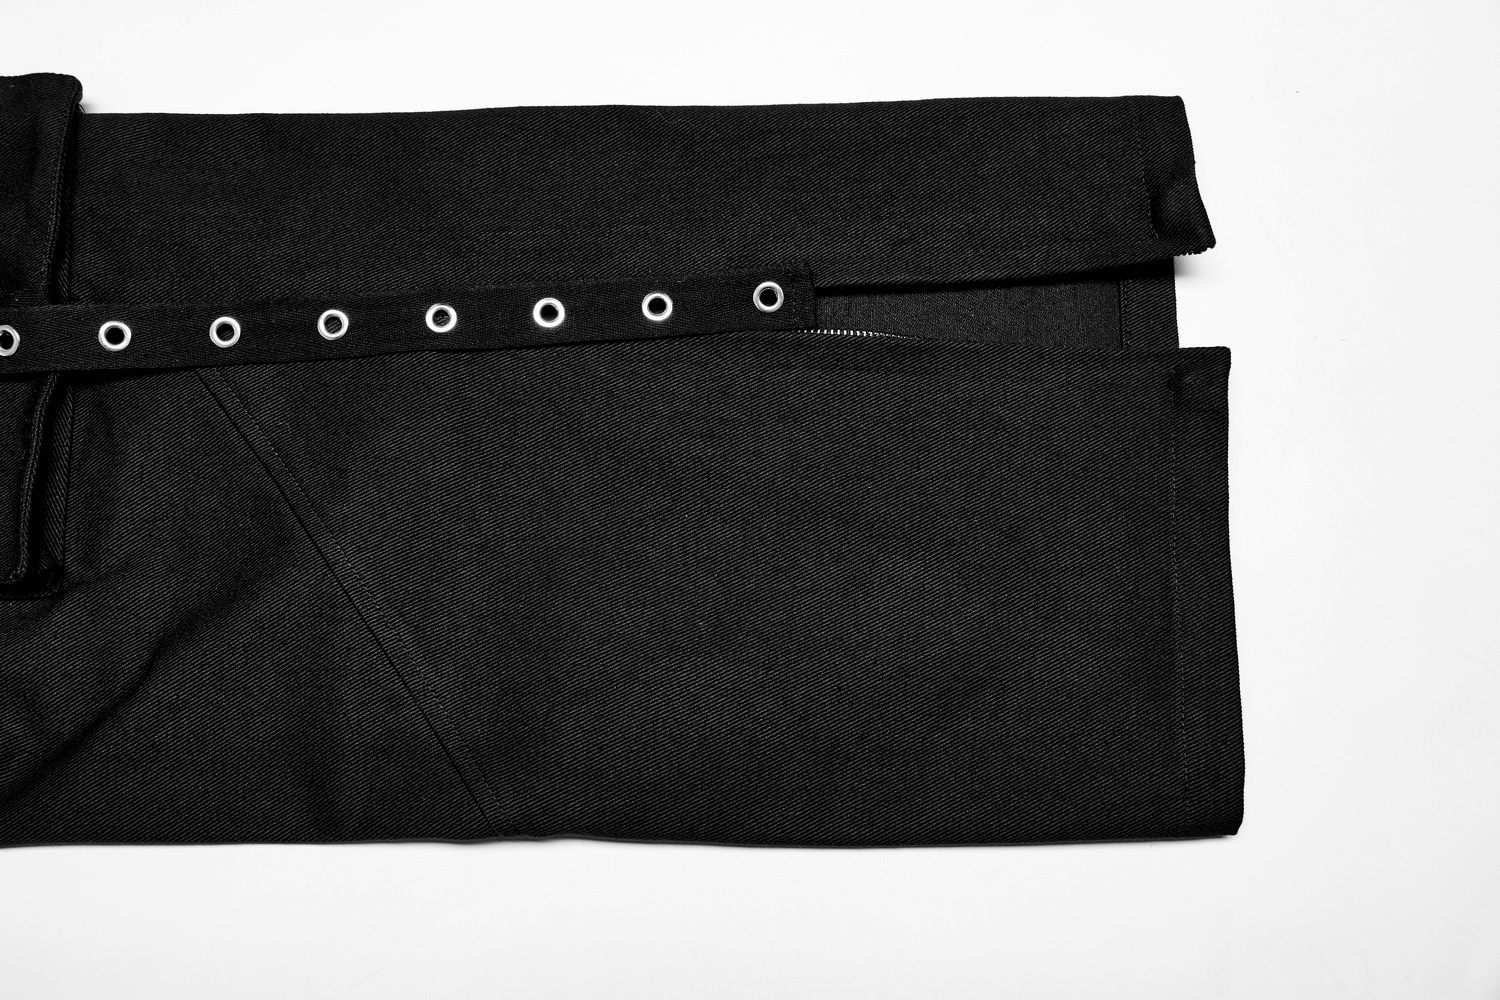 Urban Black Medium Waist Cargo Pants with Pockets